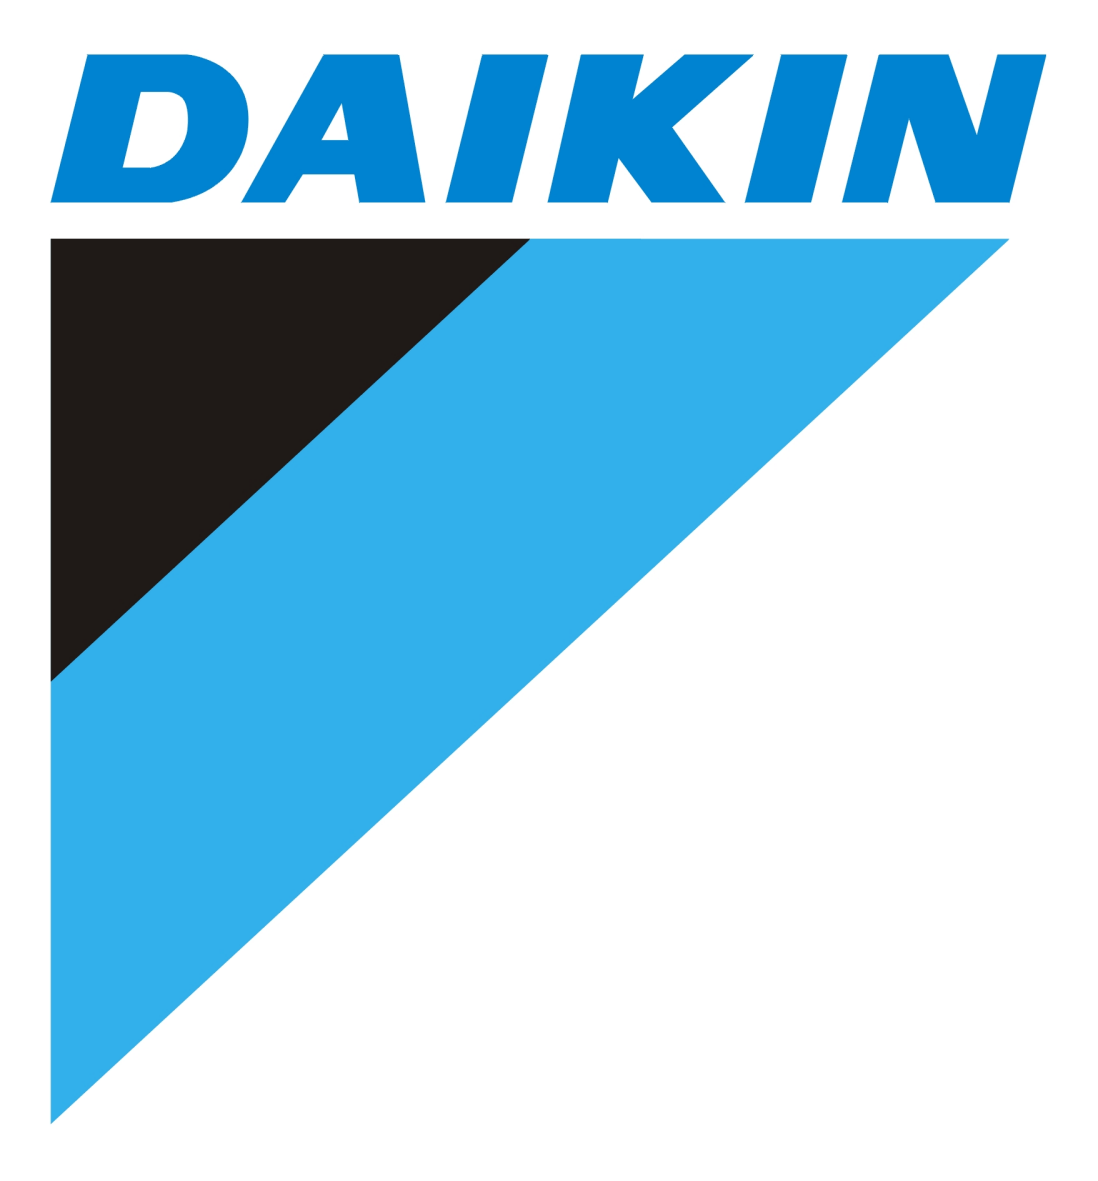 Daikin Logo - Image - Daikin logo.gif | Logopedia | FANDOM powered by Wikia